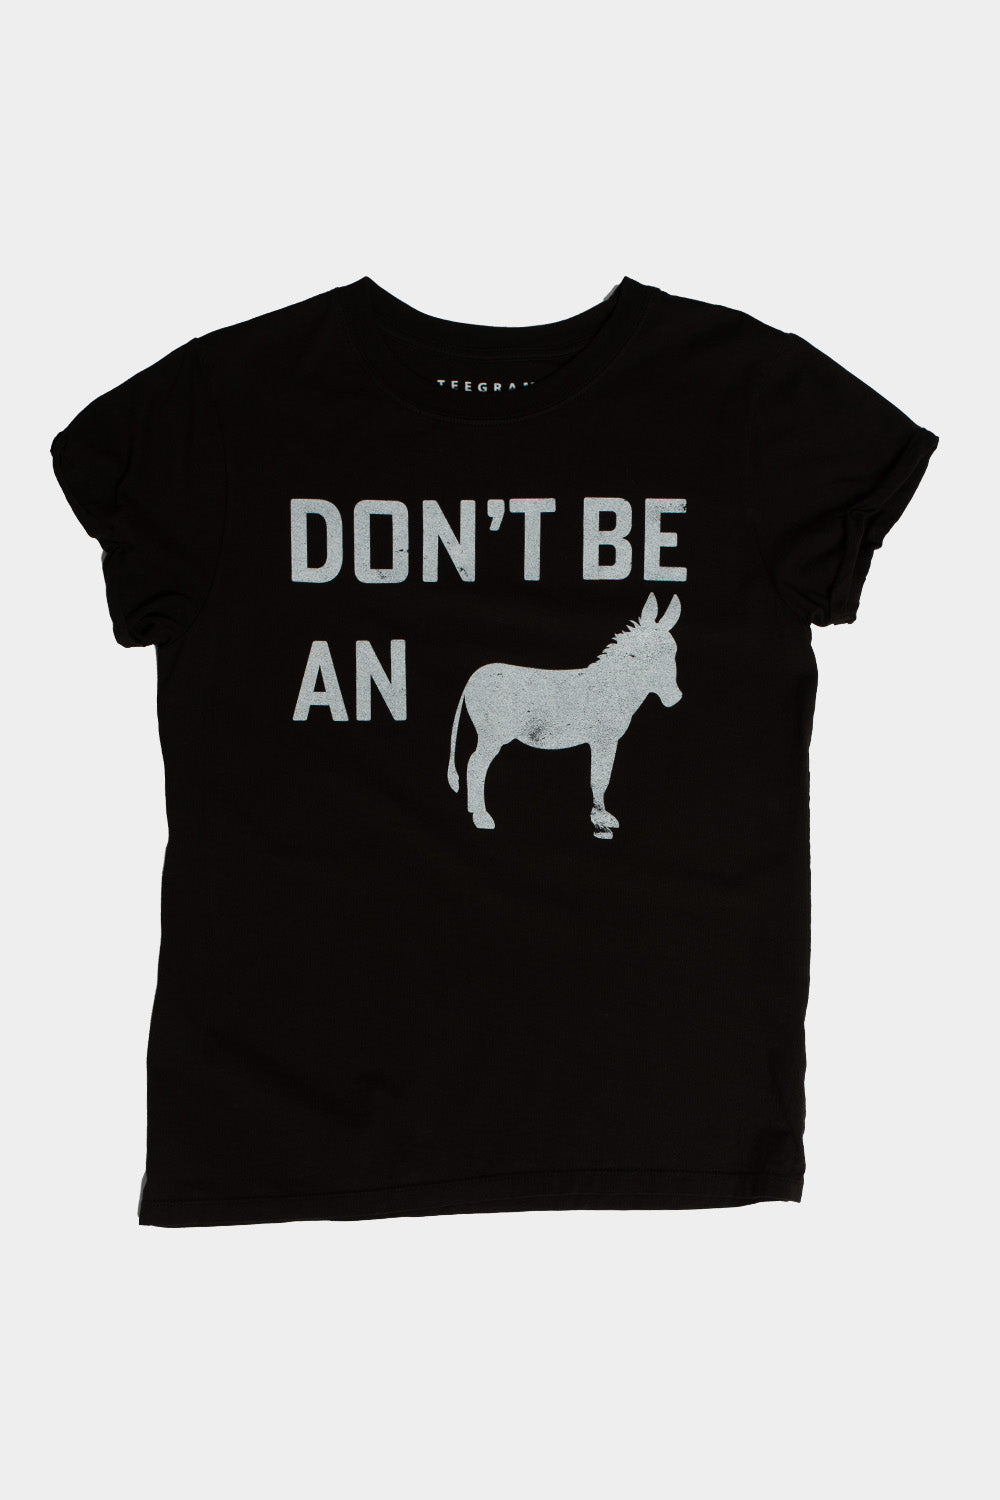 Don't Be A "Donkey" Black Tee